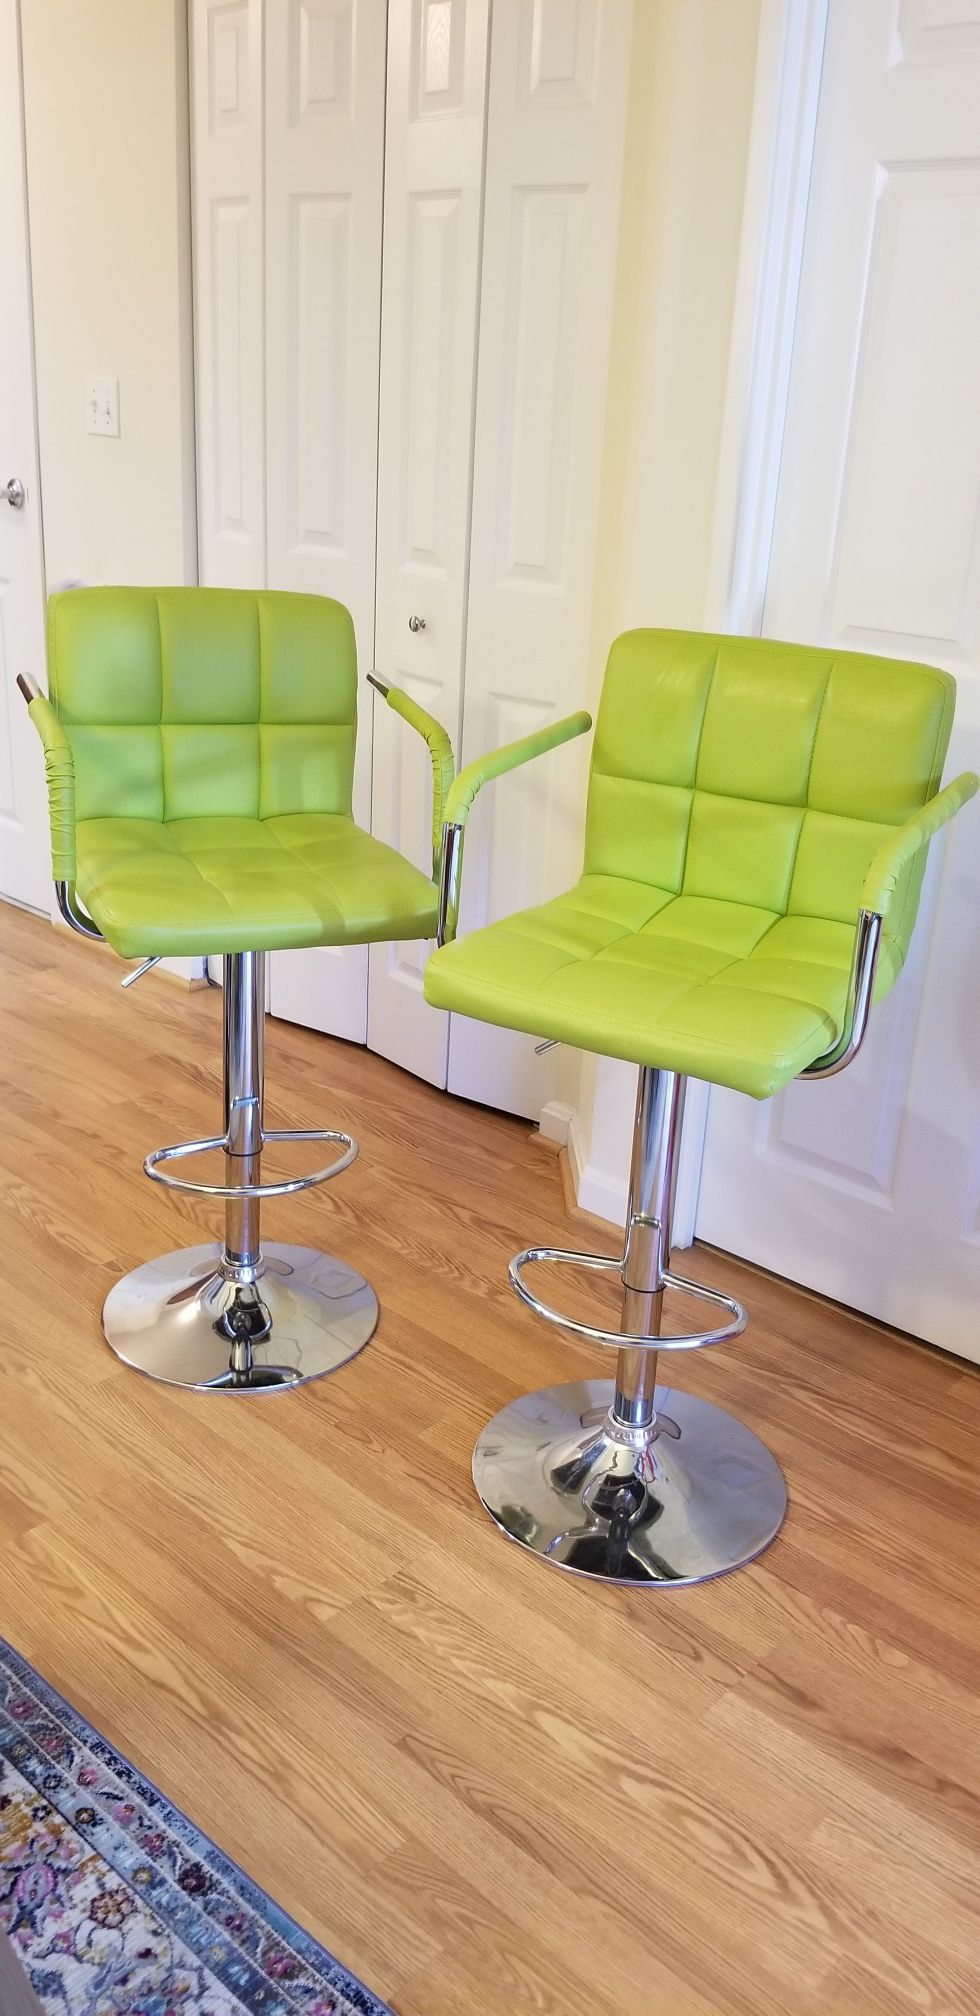 High stool chairs, $70 both